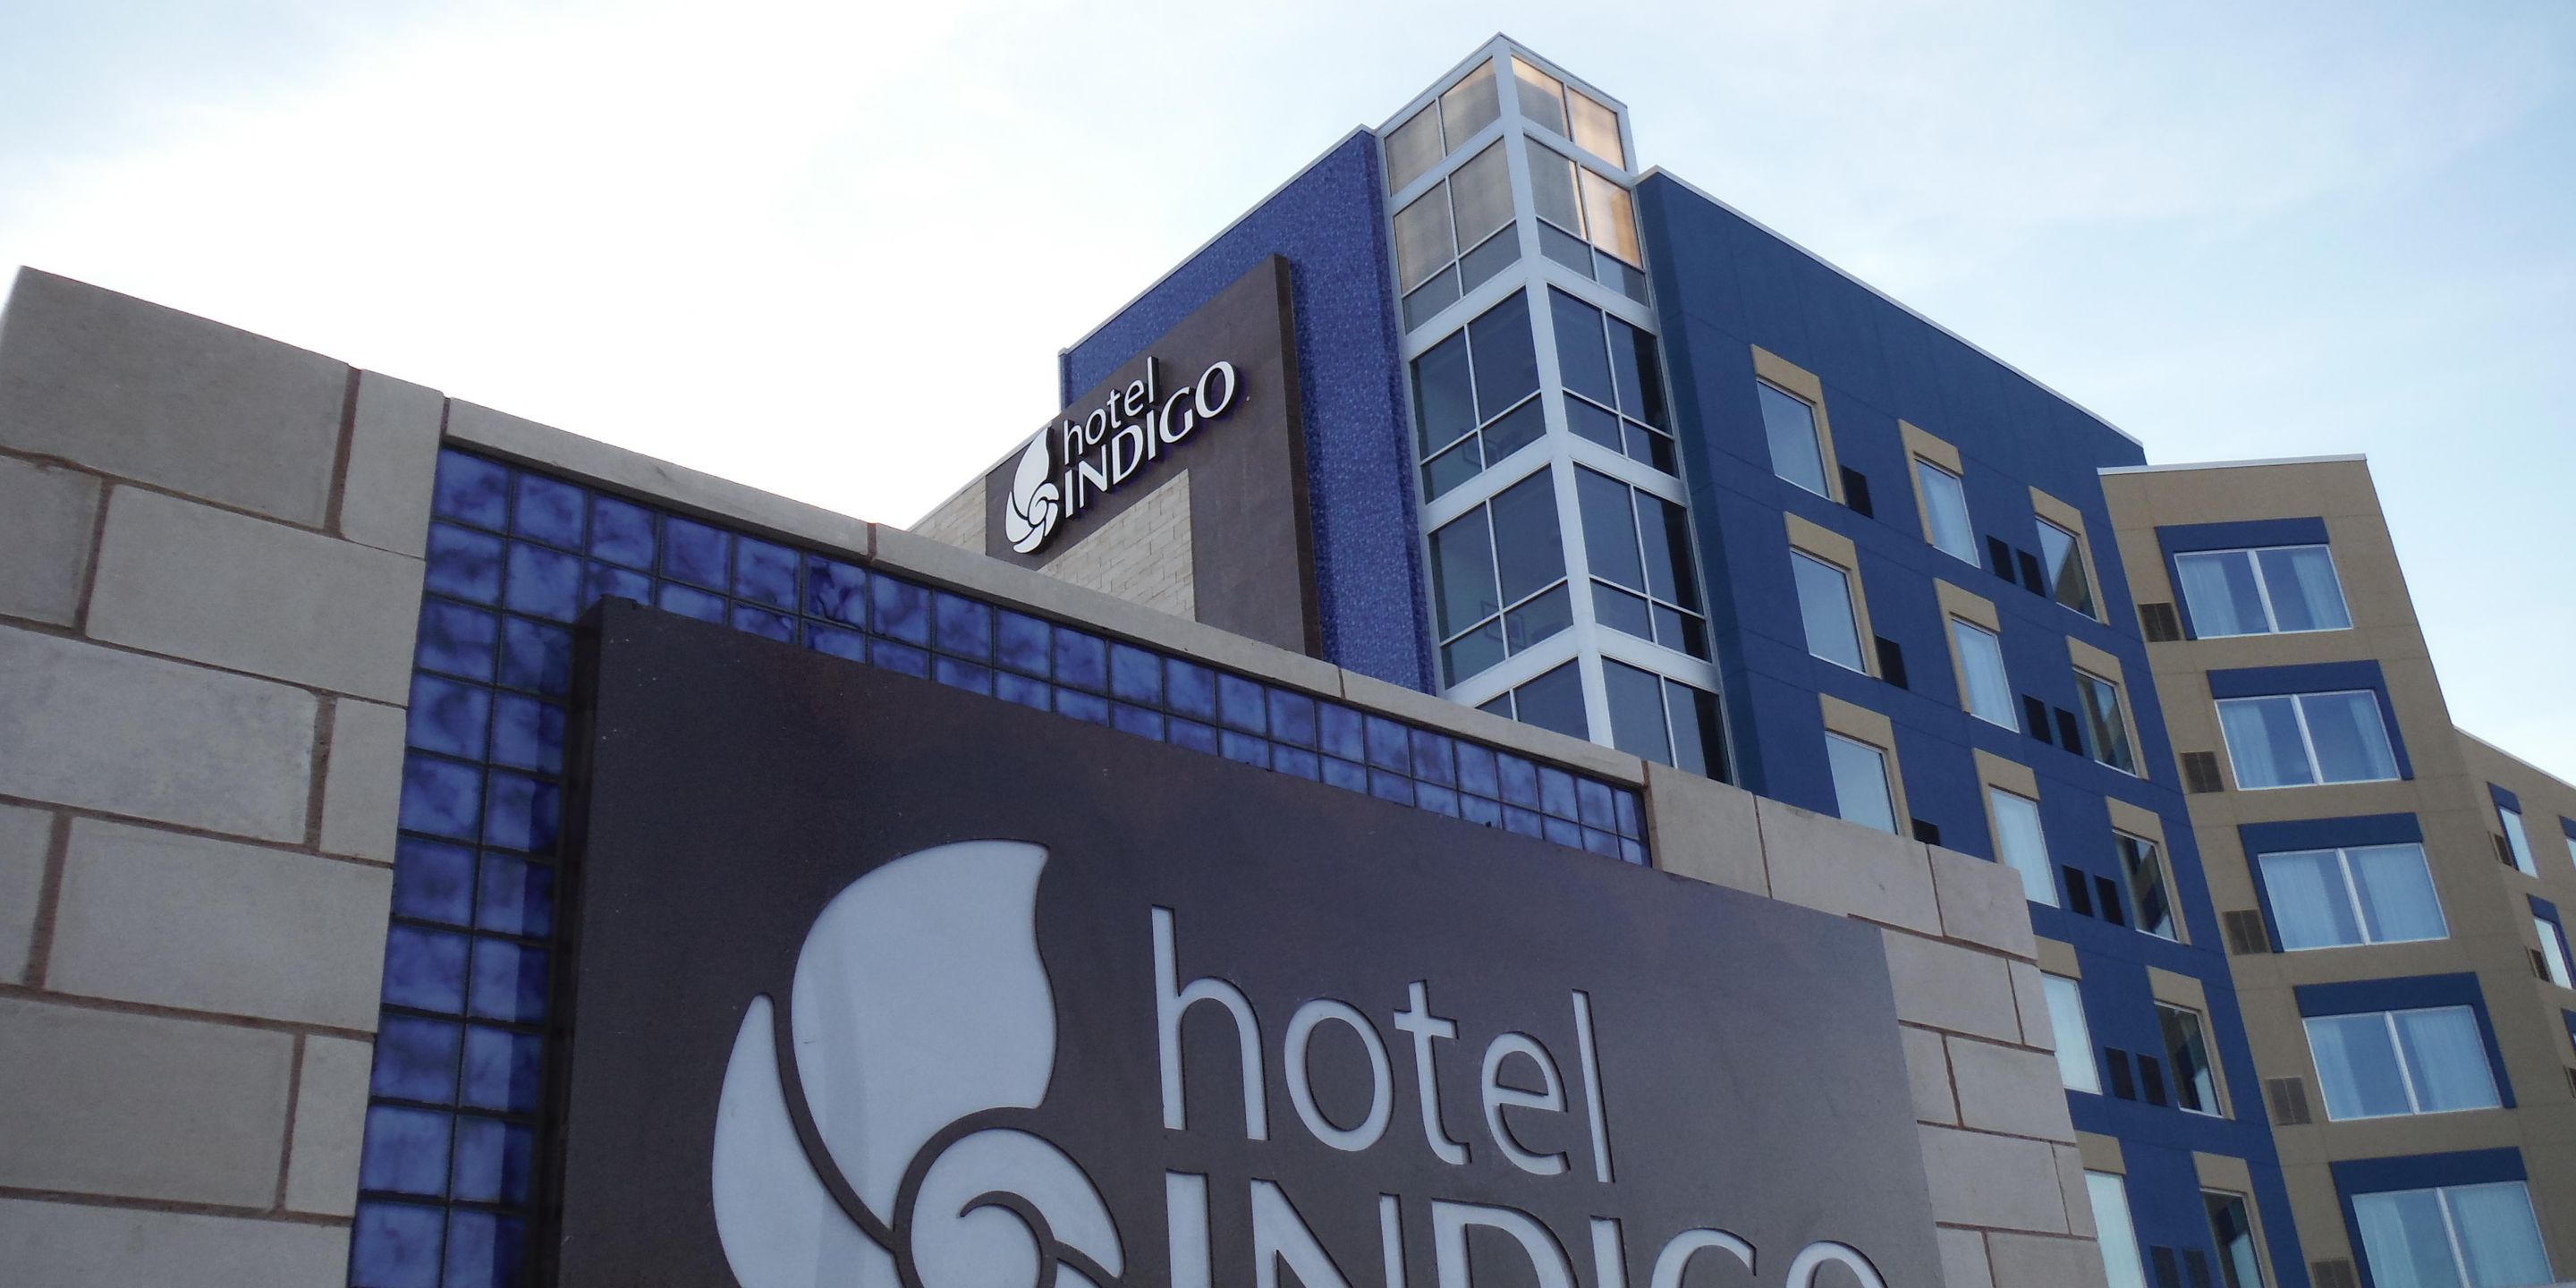 Indigo hotel